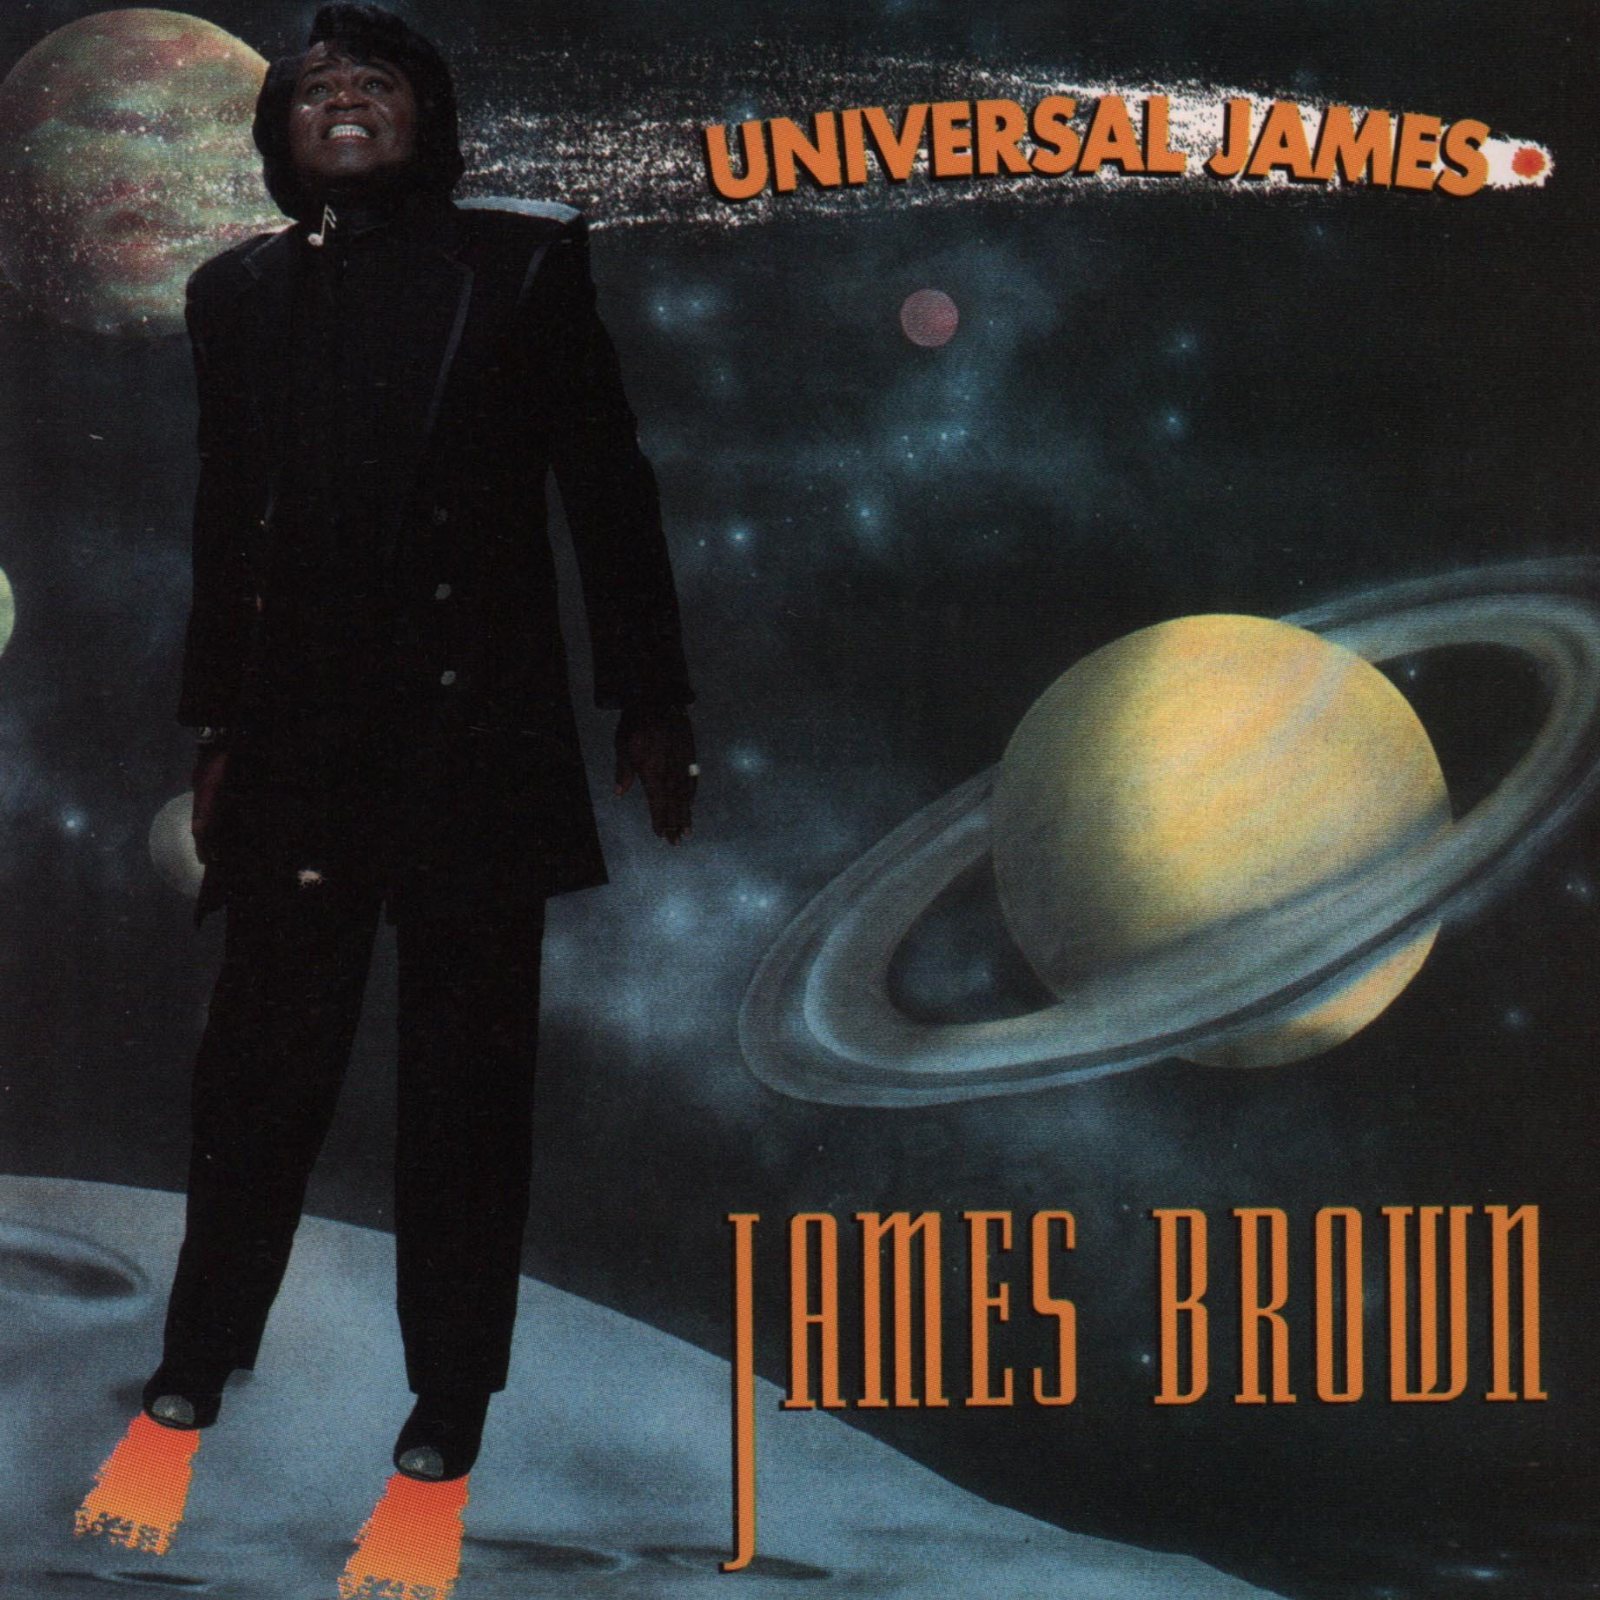 Слушать песни браун. James Brown Universal James. James Brown album.